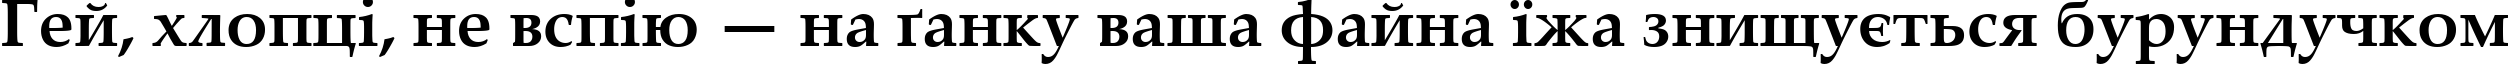 Пример написания шрифтом Palatino Linotype Bold текста на украинском